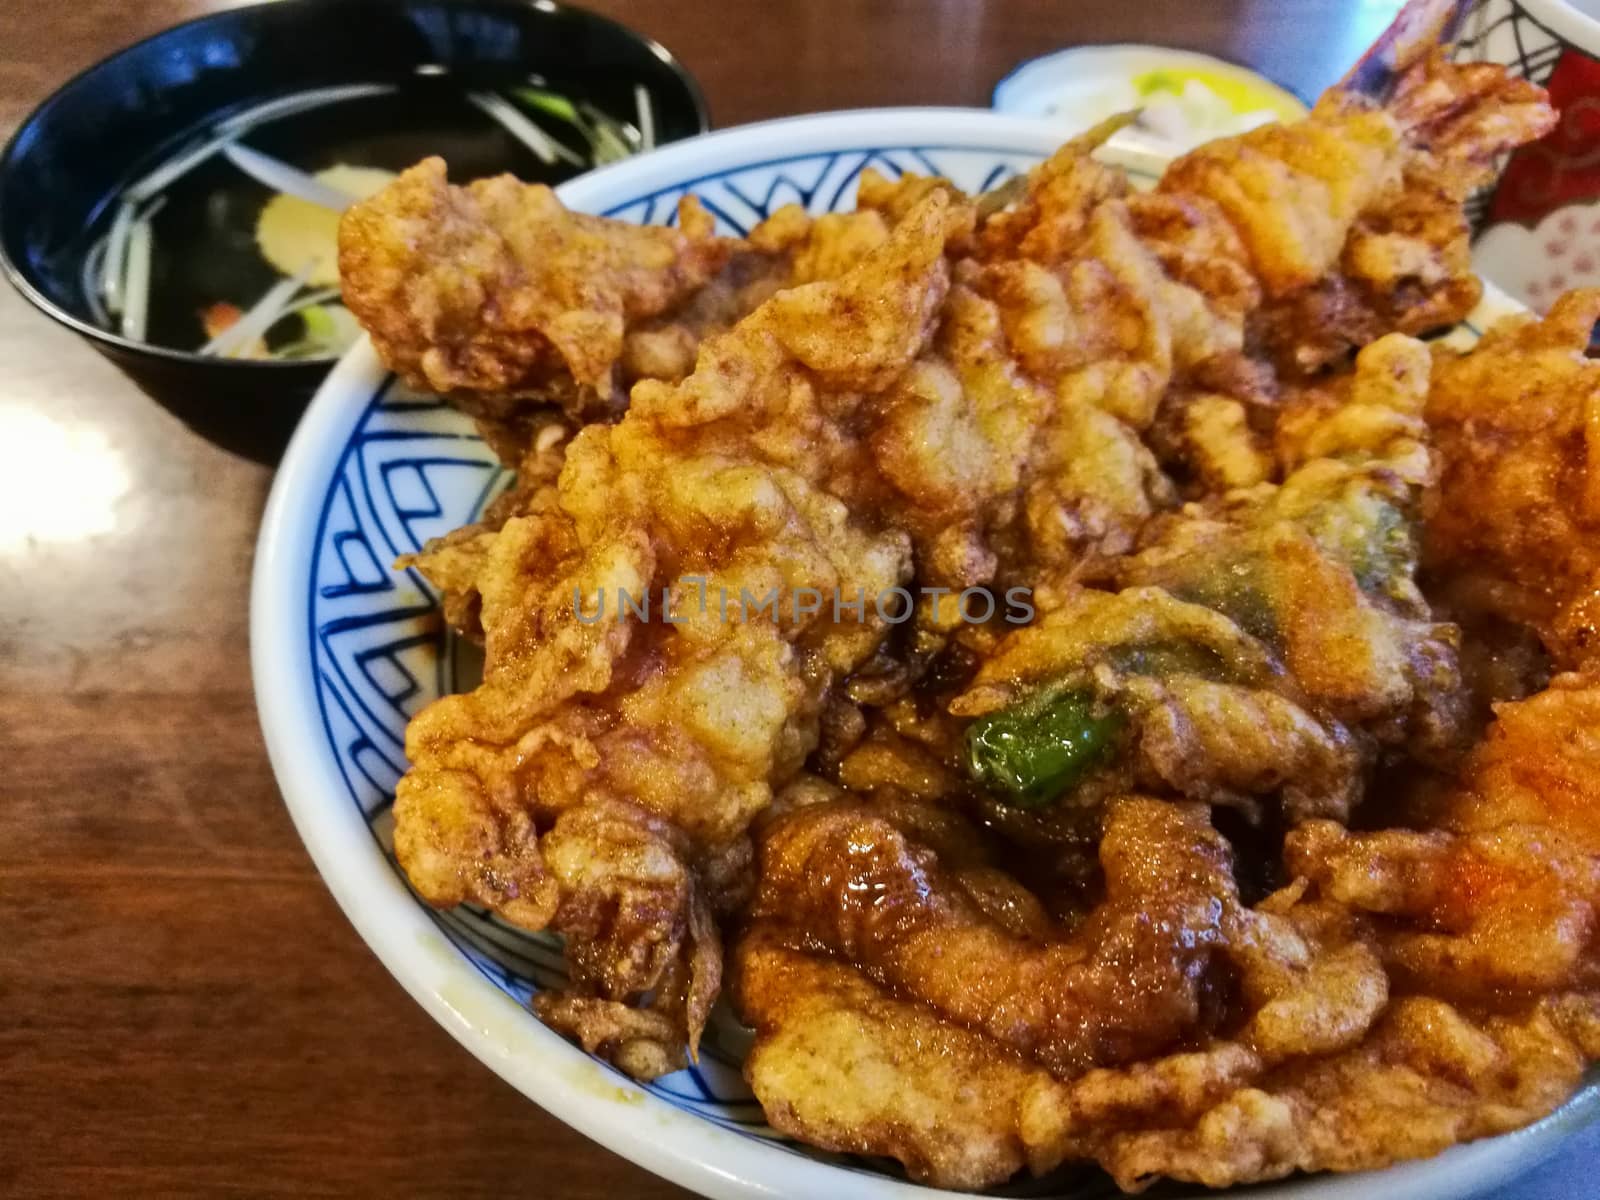 Traditional mixed prawn tempura in sesame oil on rice by eyeofpaul